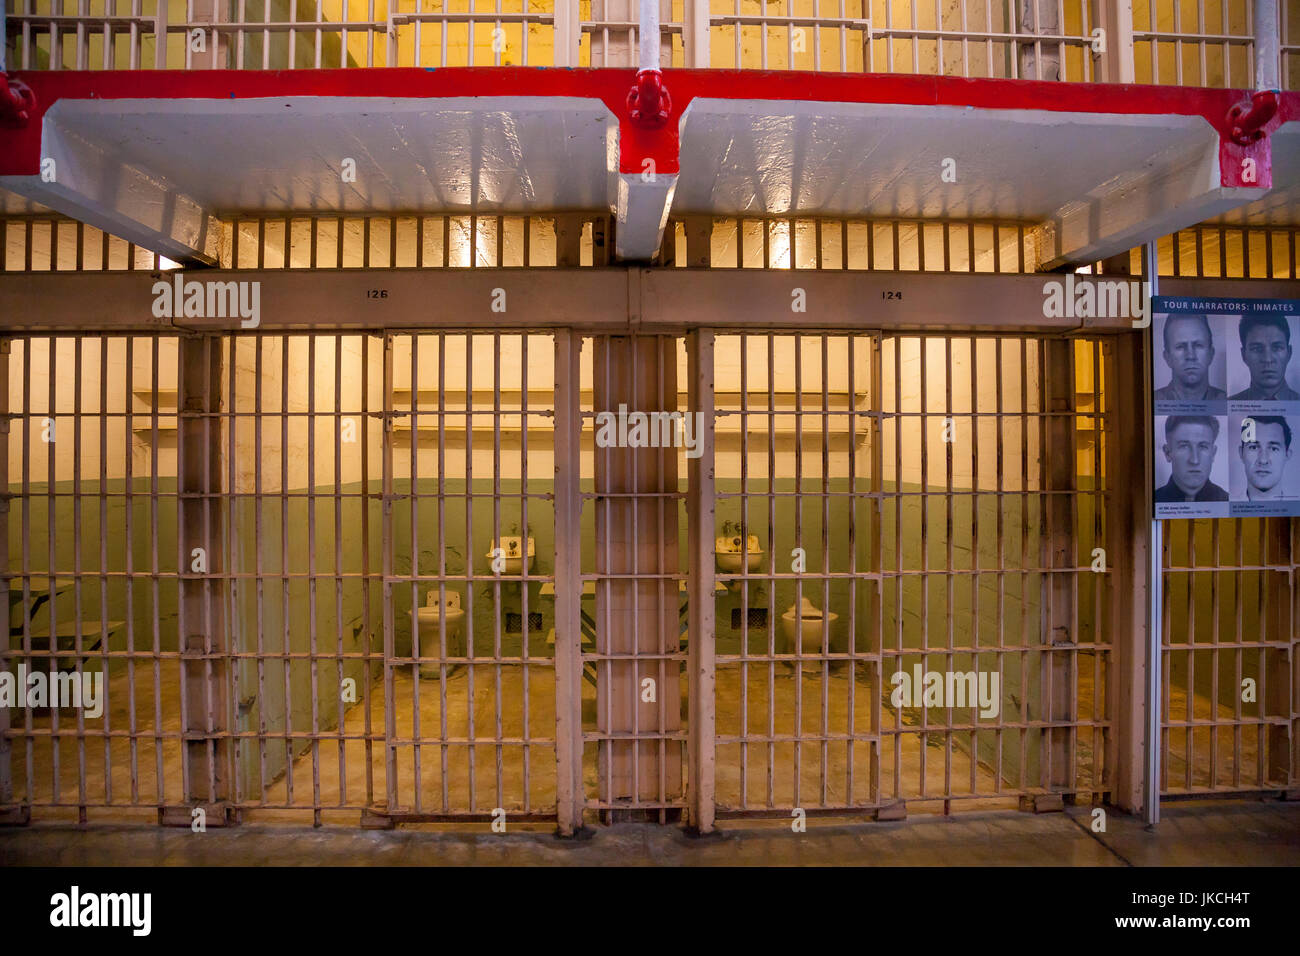 Prison cells inside Alcatraz penitentiary, San Francisco, California, USA Stock Photo